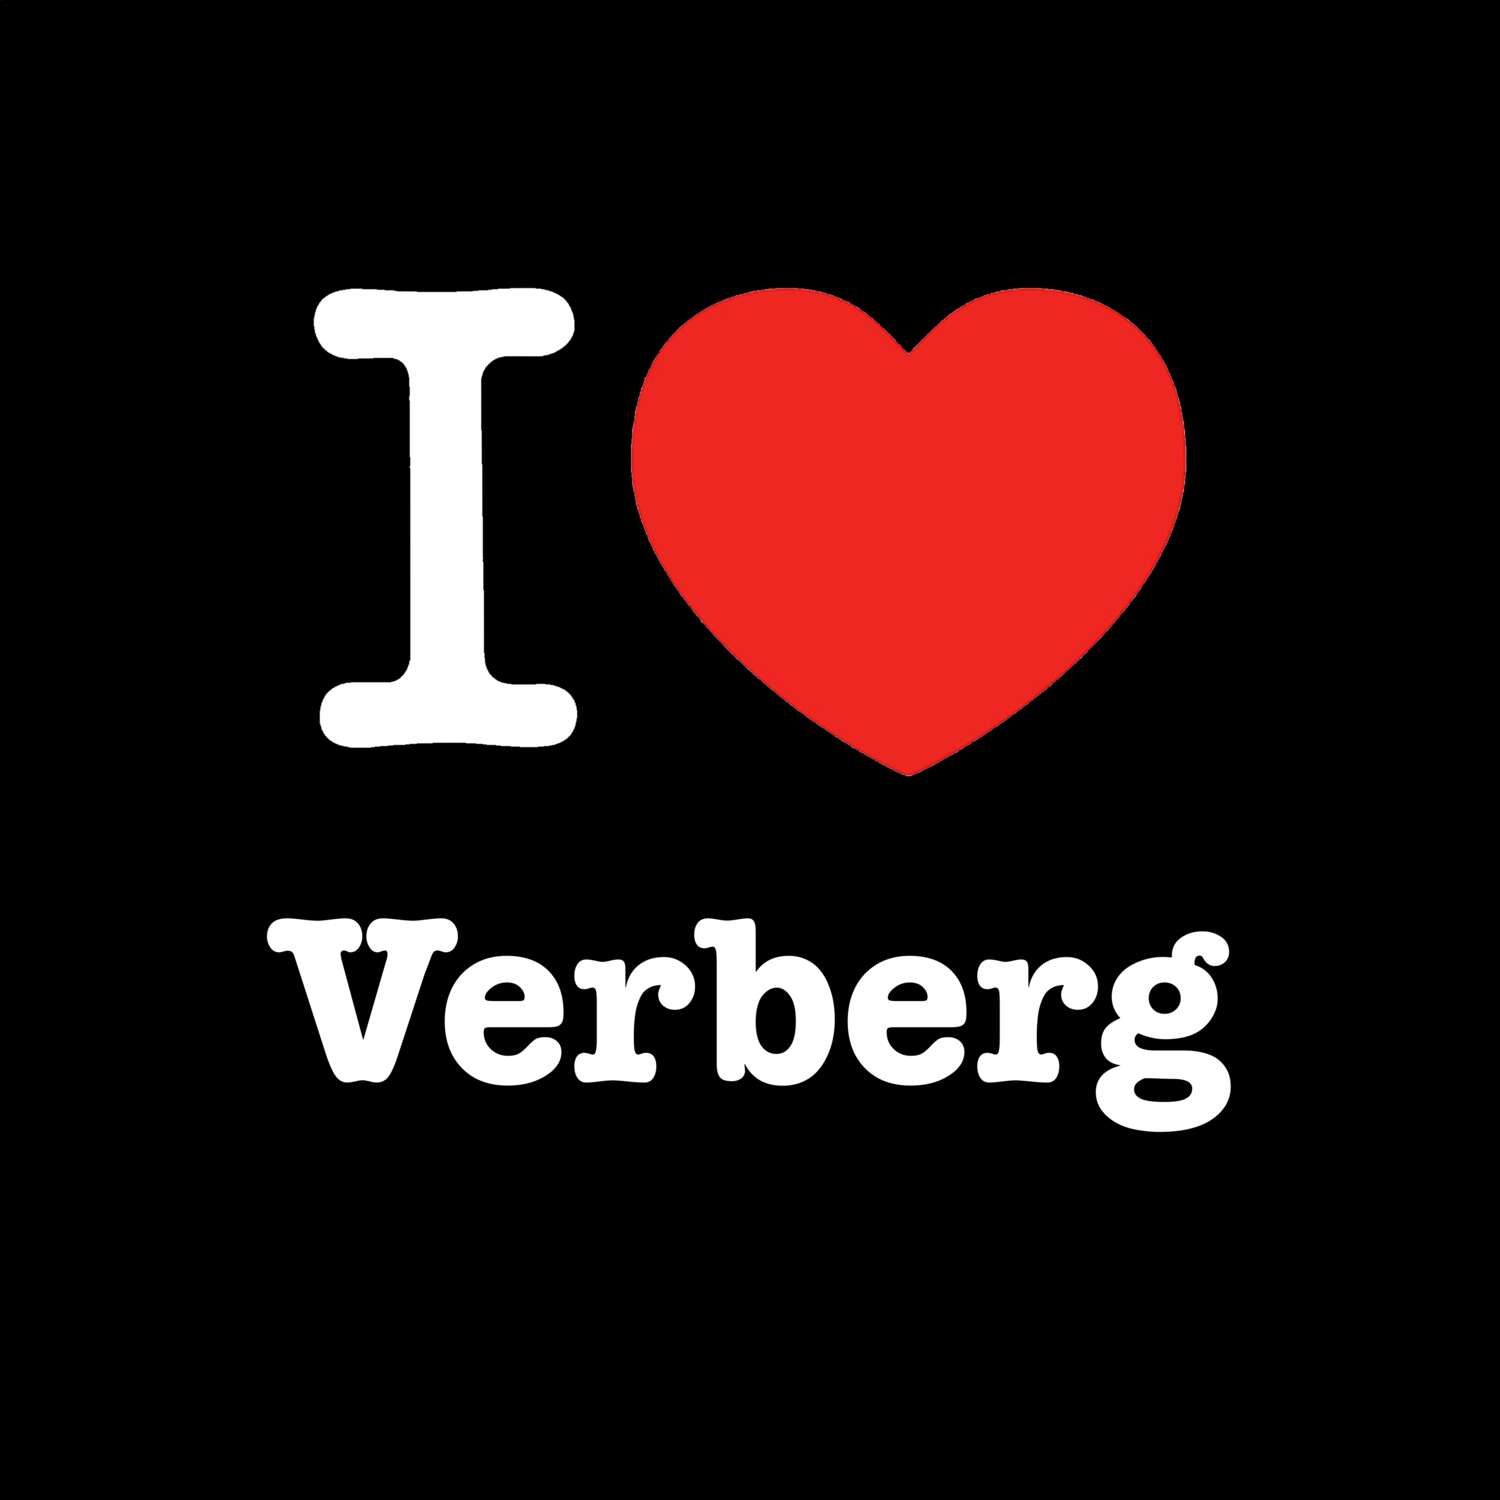 Verberg T-Shirt »I love«